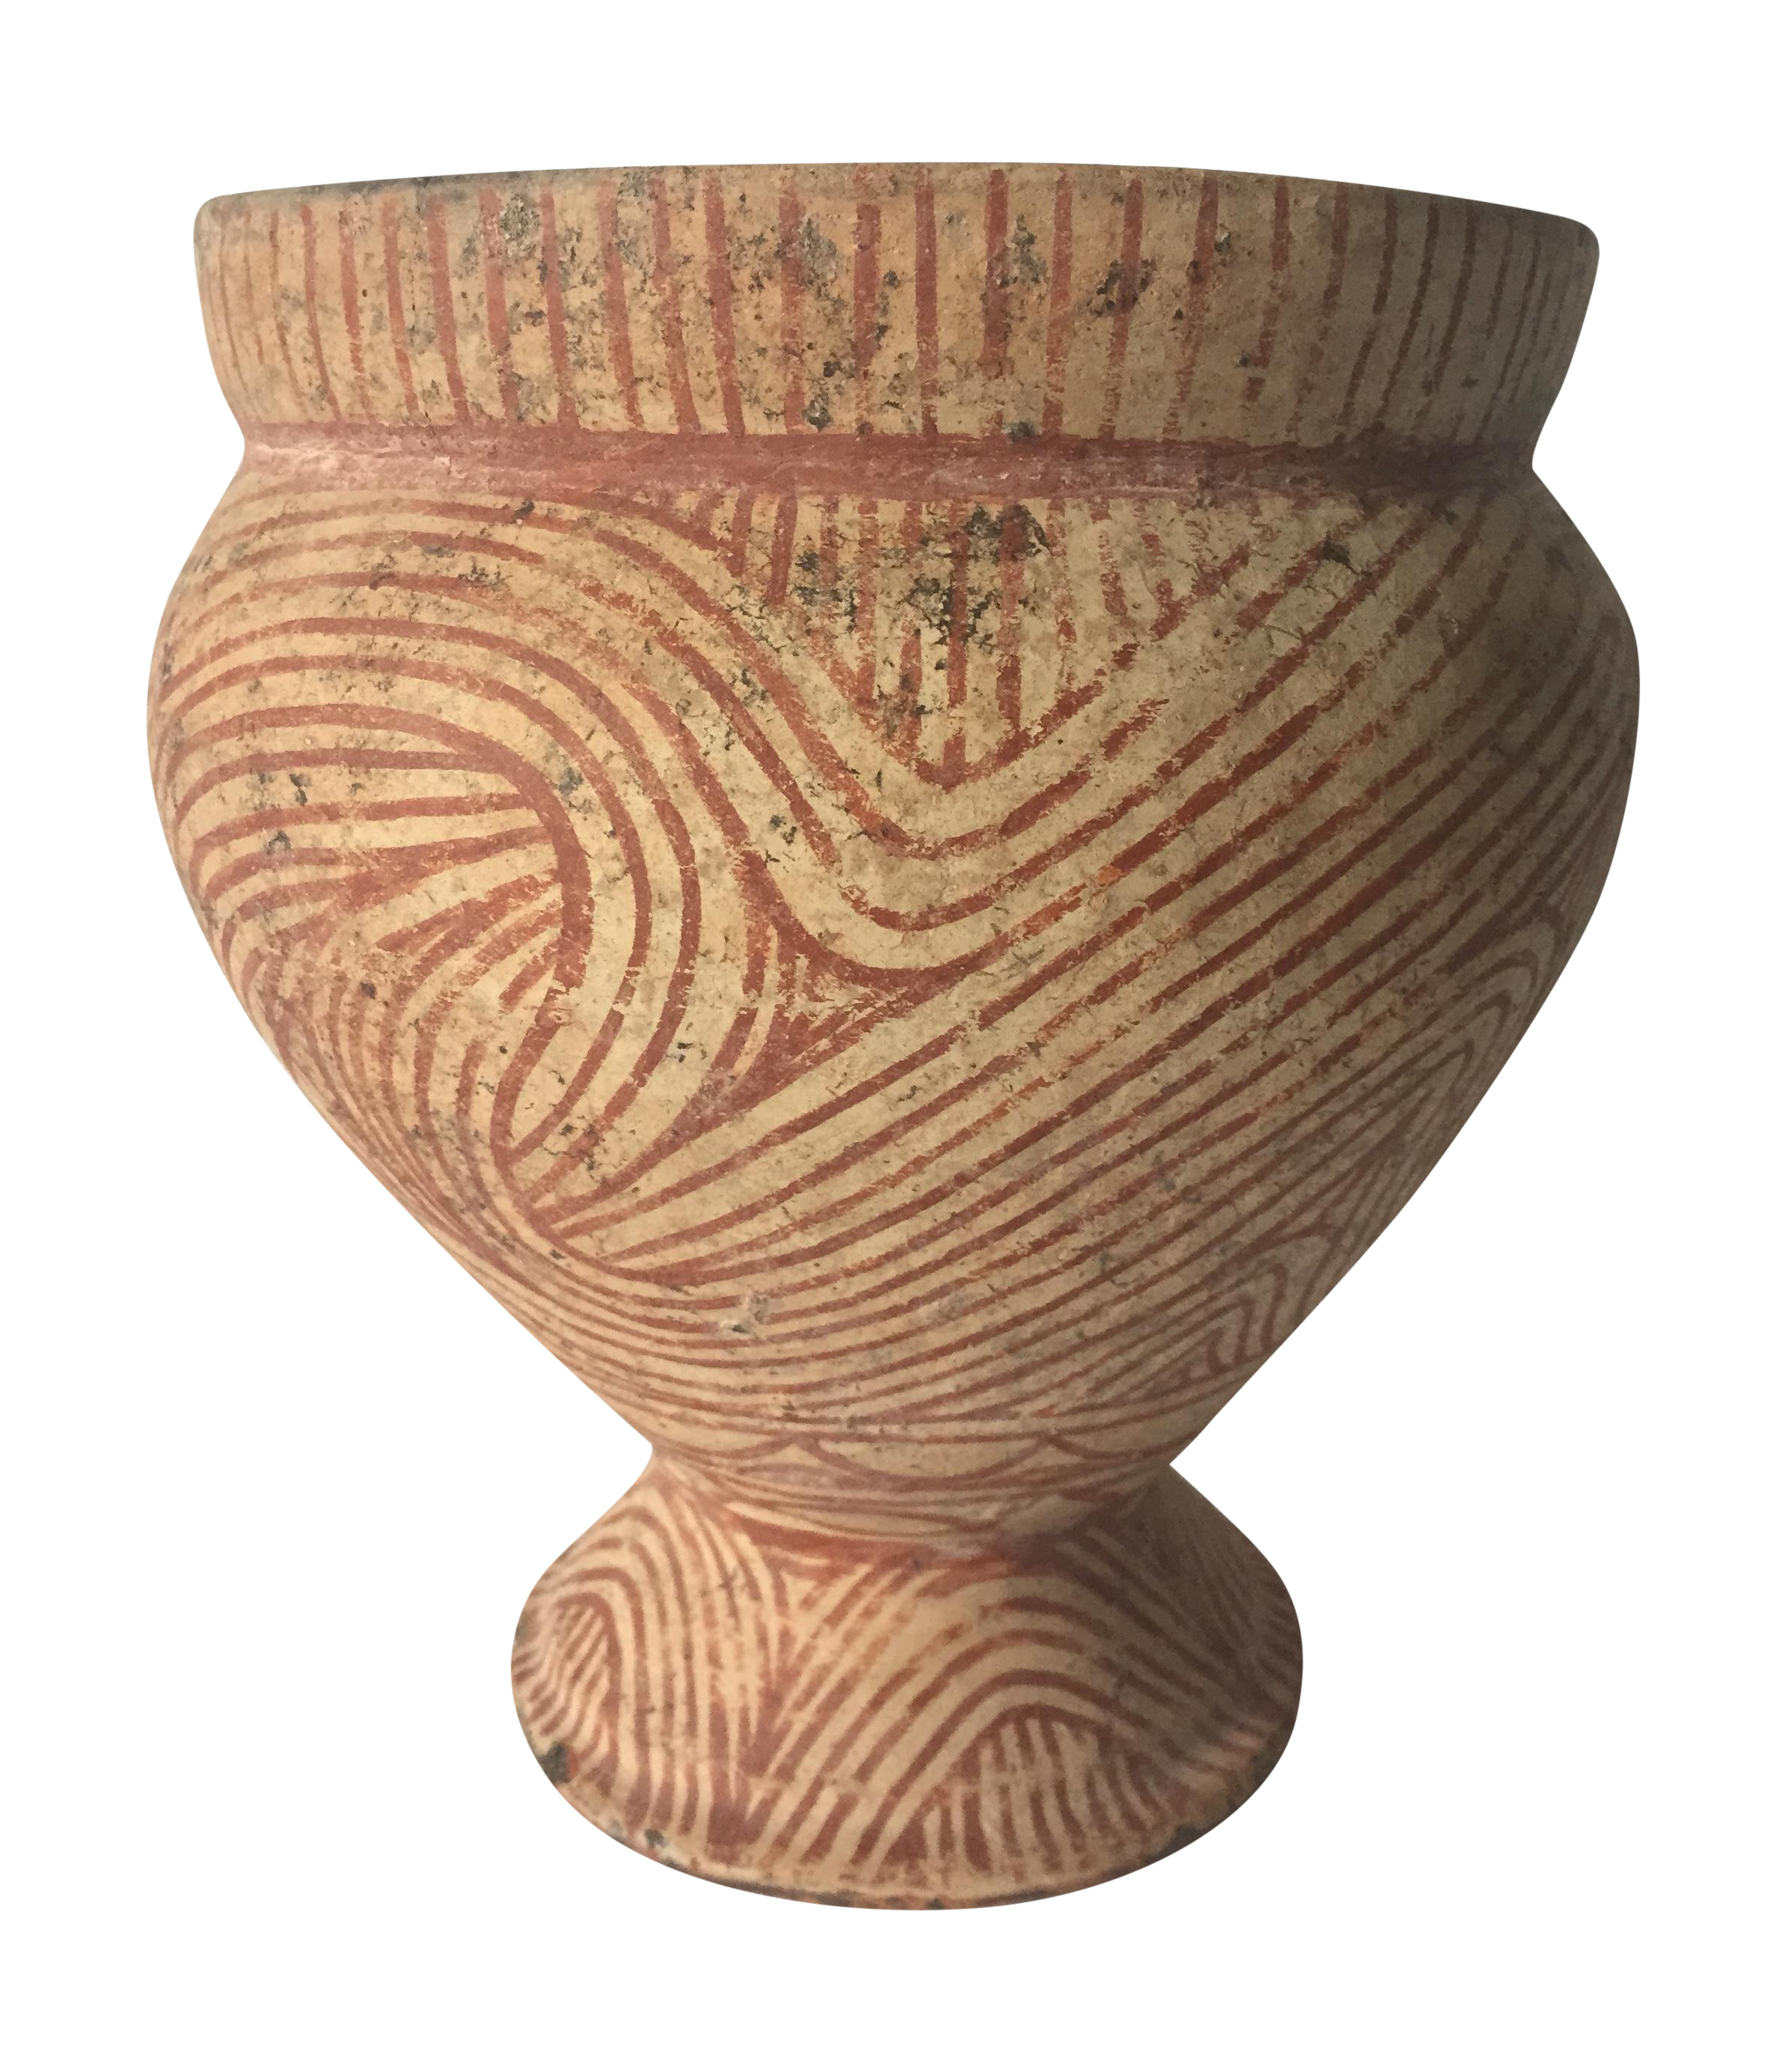 Ancient C. 500 BC Ban Chiang Period Thai Pottery | Chairish